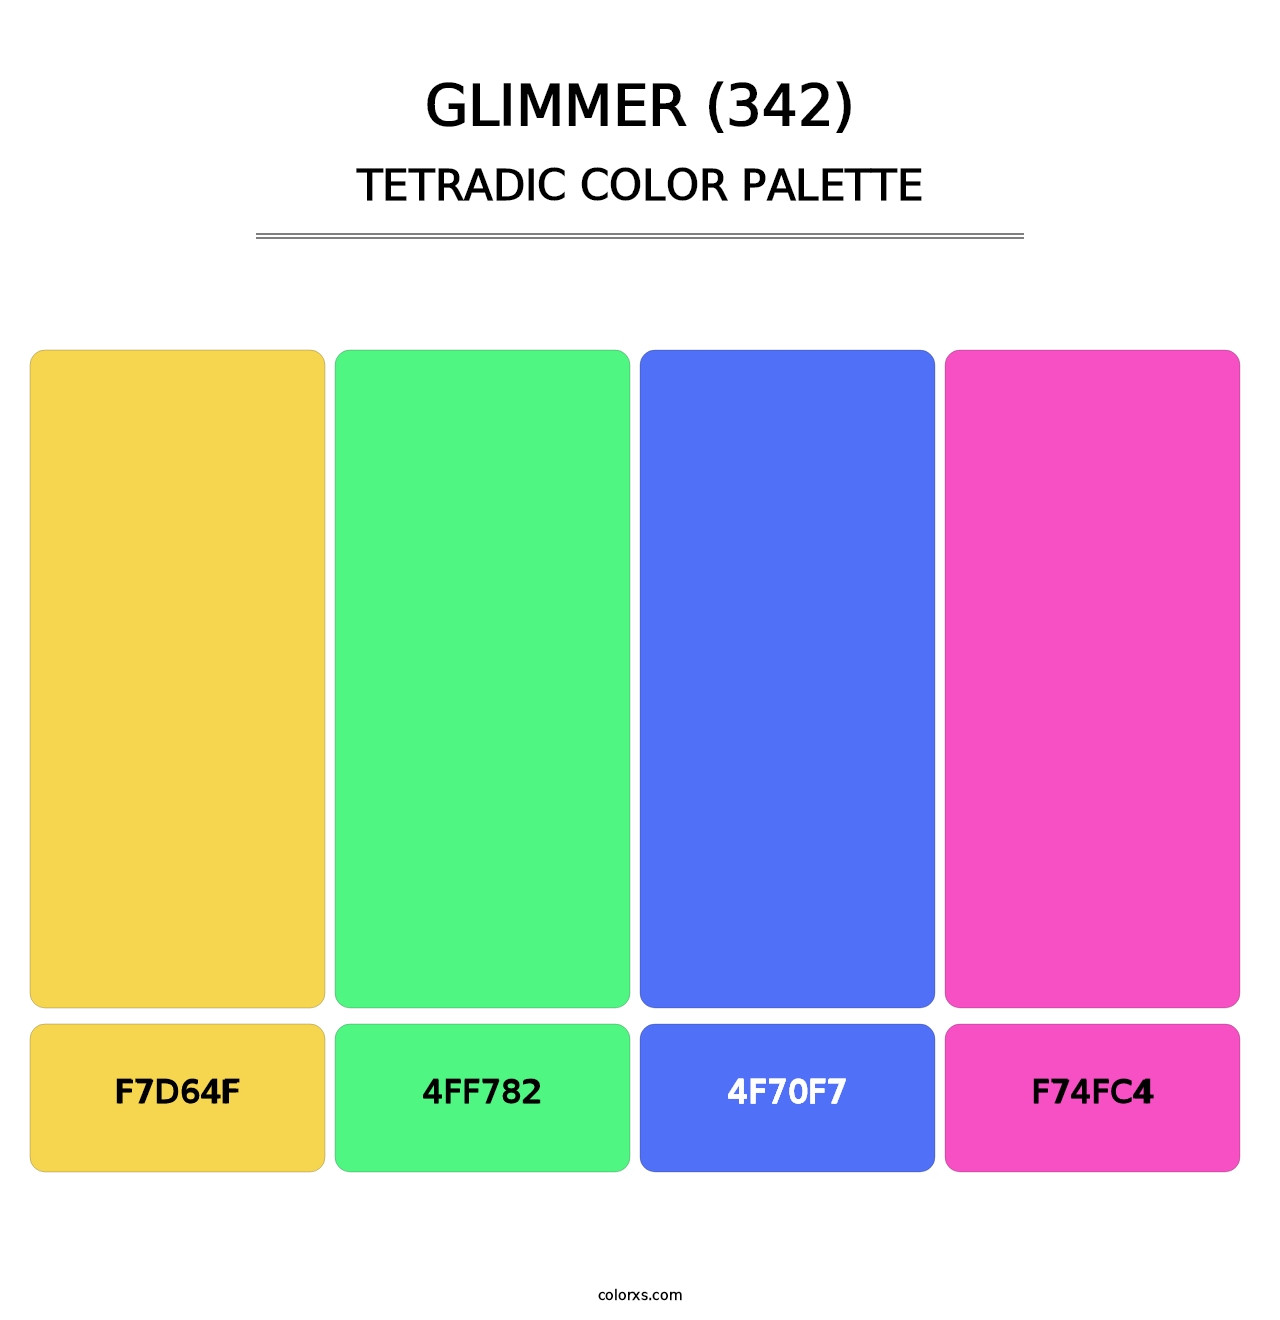 Glimmer (342) - Tetradic Color Palette